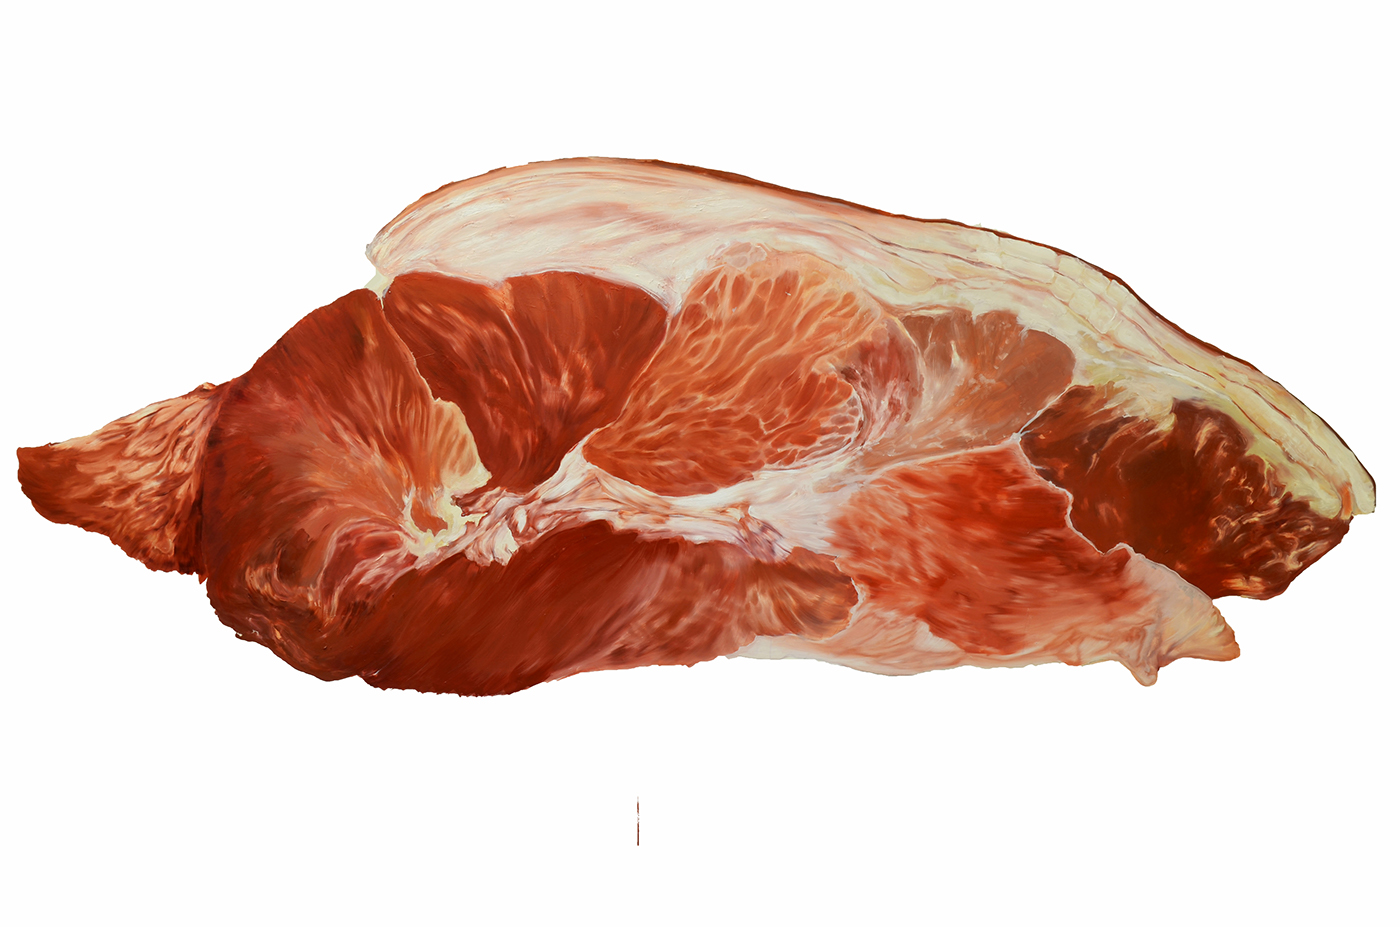 meat Food  Chuck bacon ham pork chops haunch meat still life organic flesh